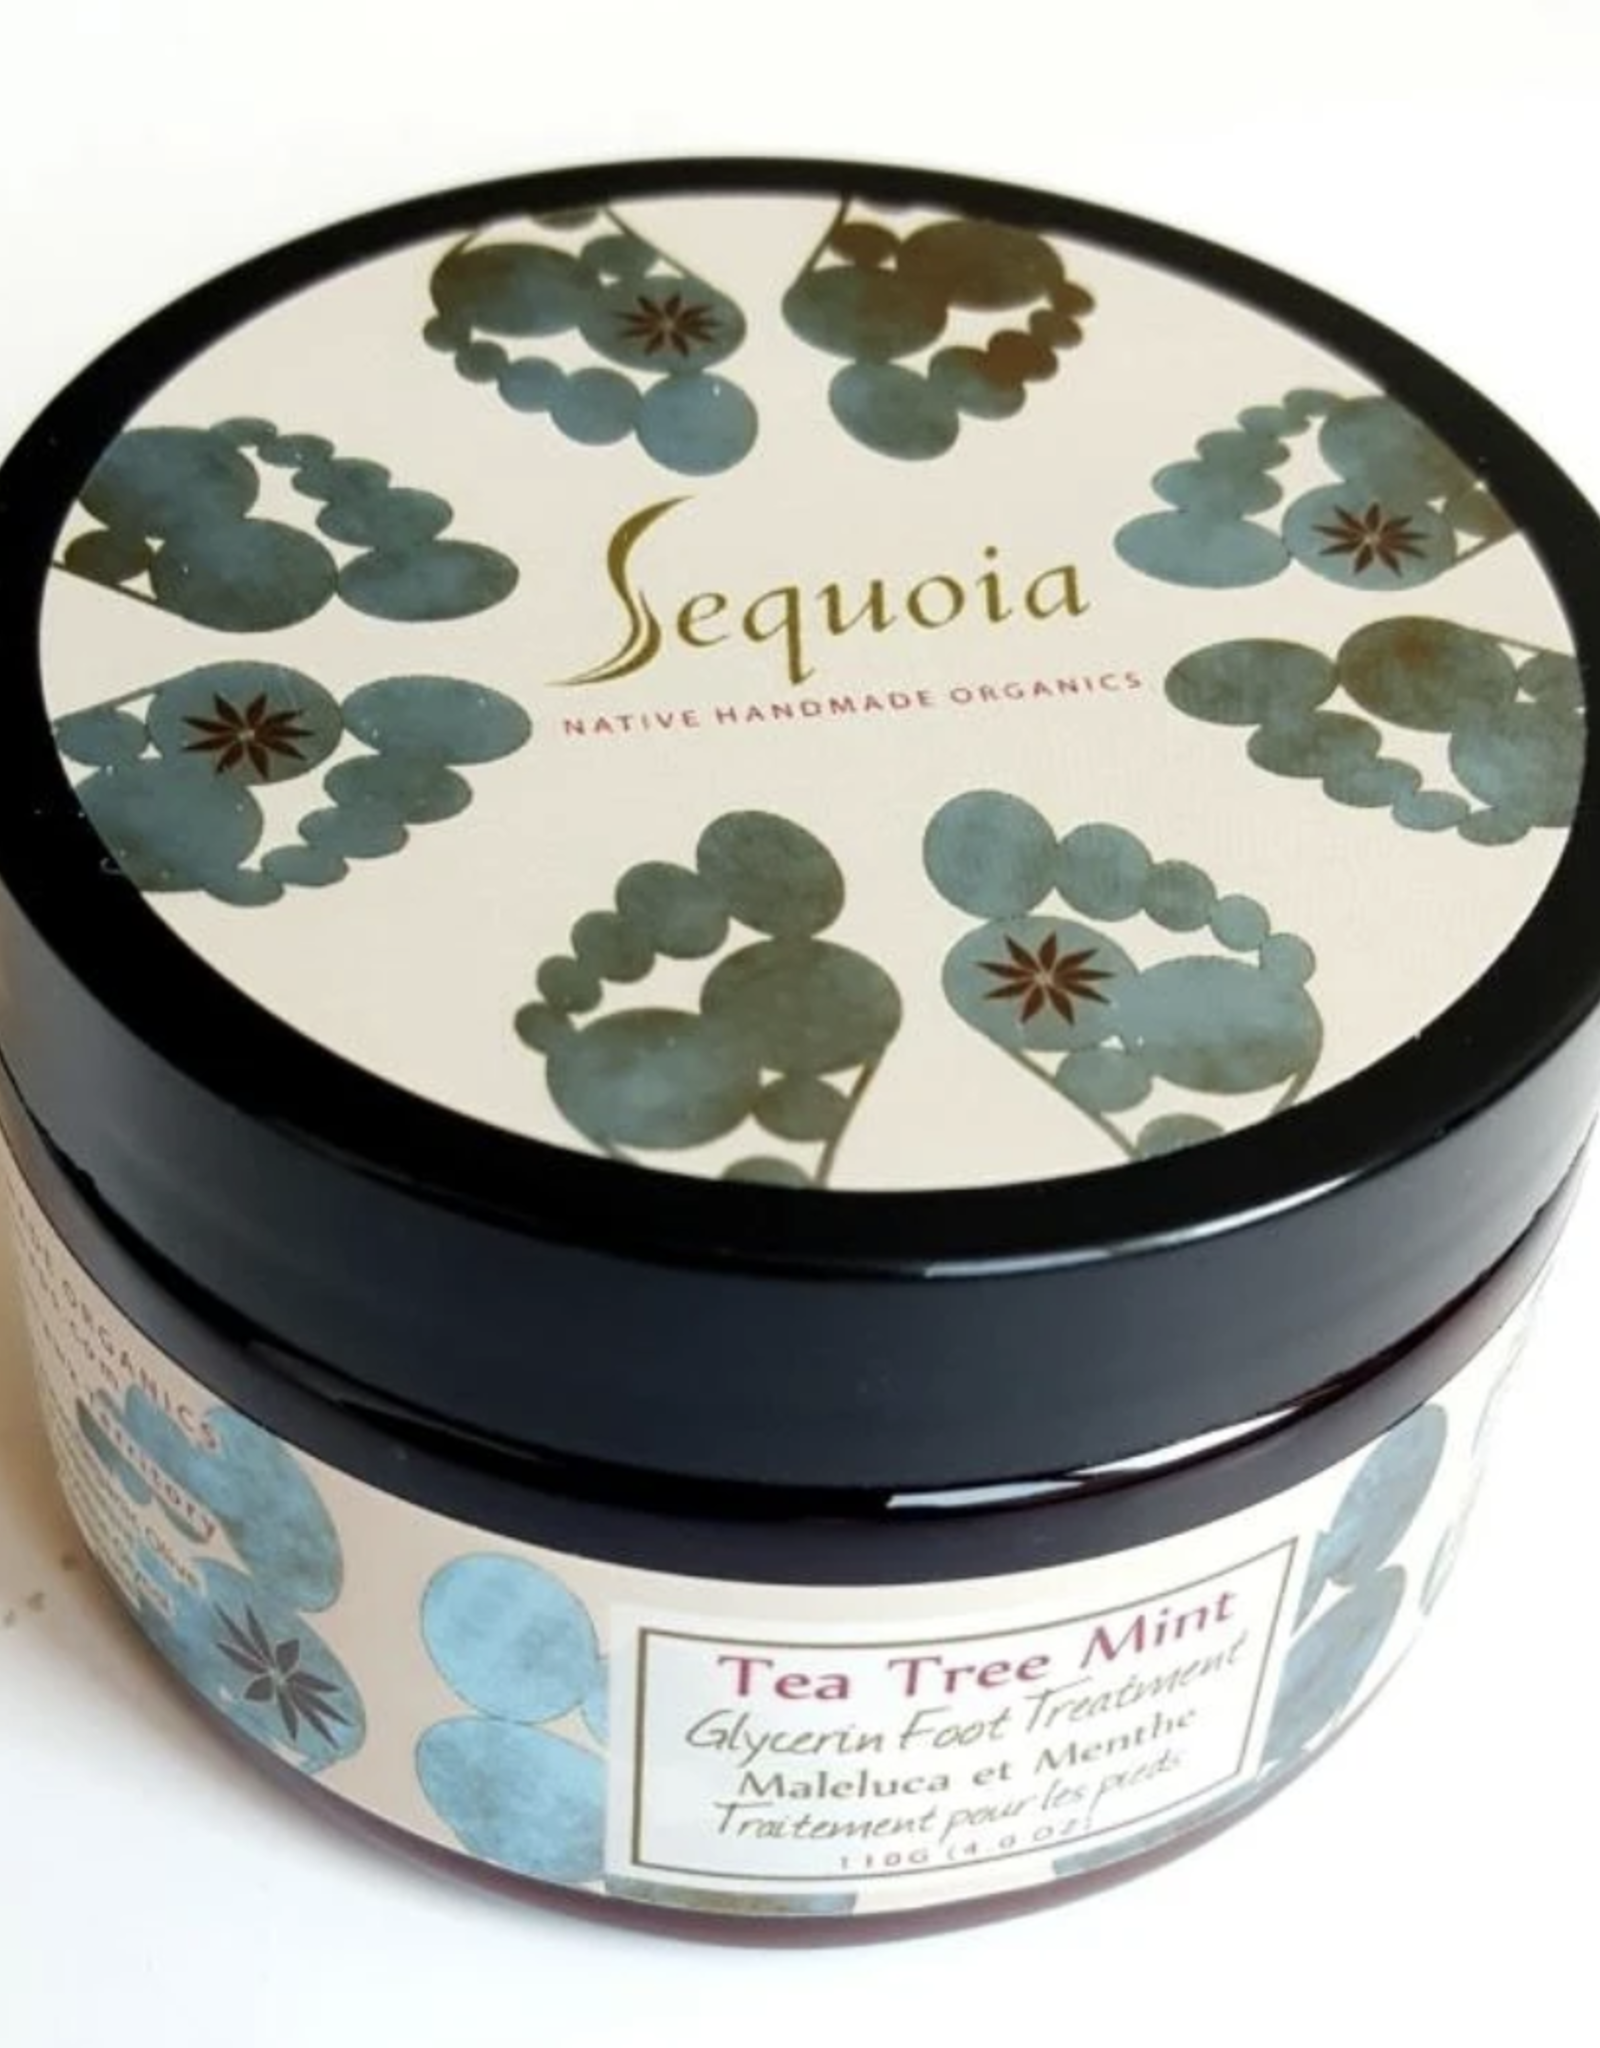 Sequoia Bath & Body Tea Tree Mint Glycerin Foot Treatment